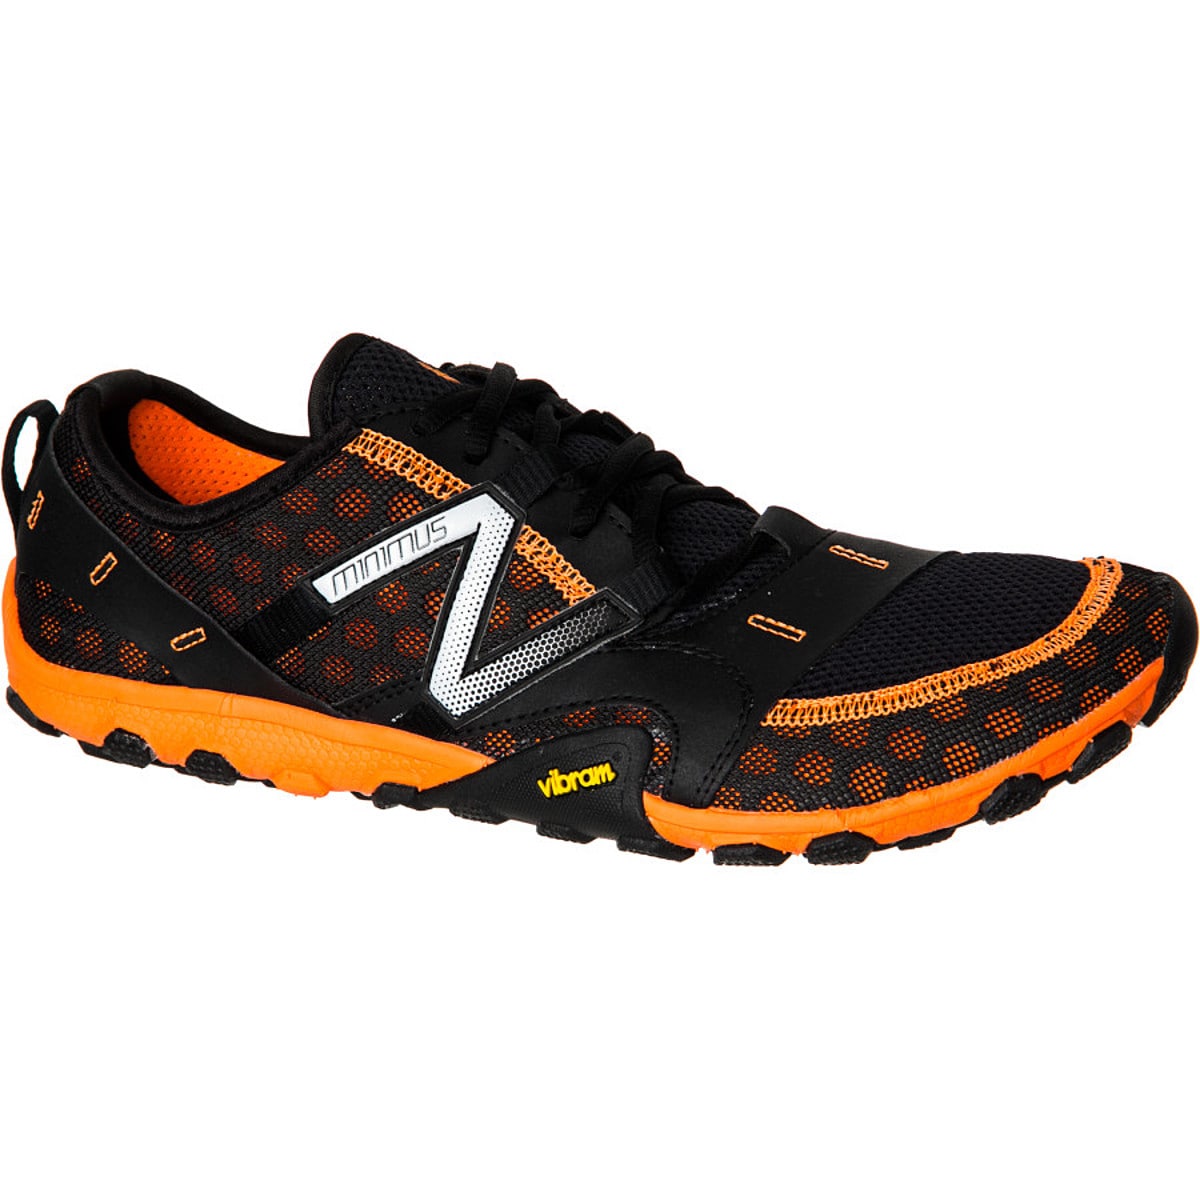 editorial Eso compañero New Balance MT10v2 Minimus Trail Running Shoe - Men's - Footwear